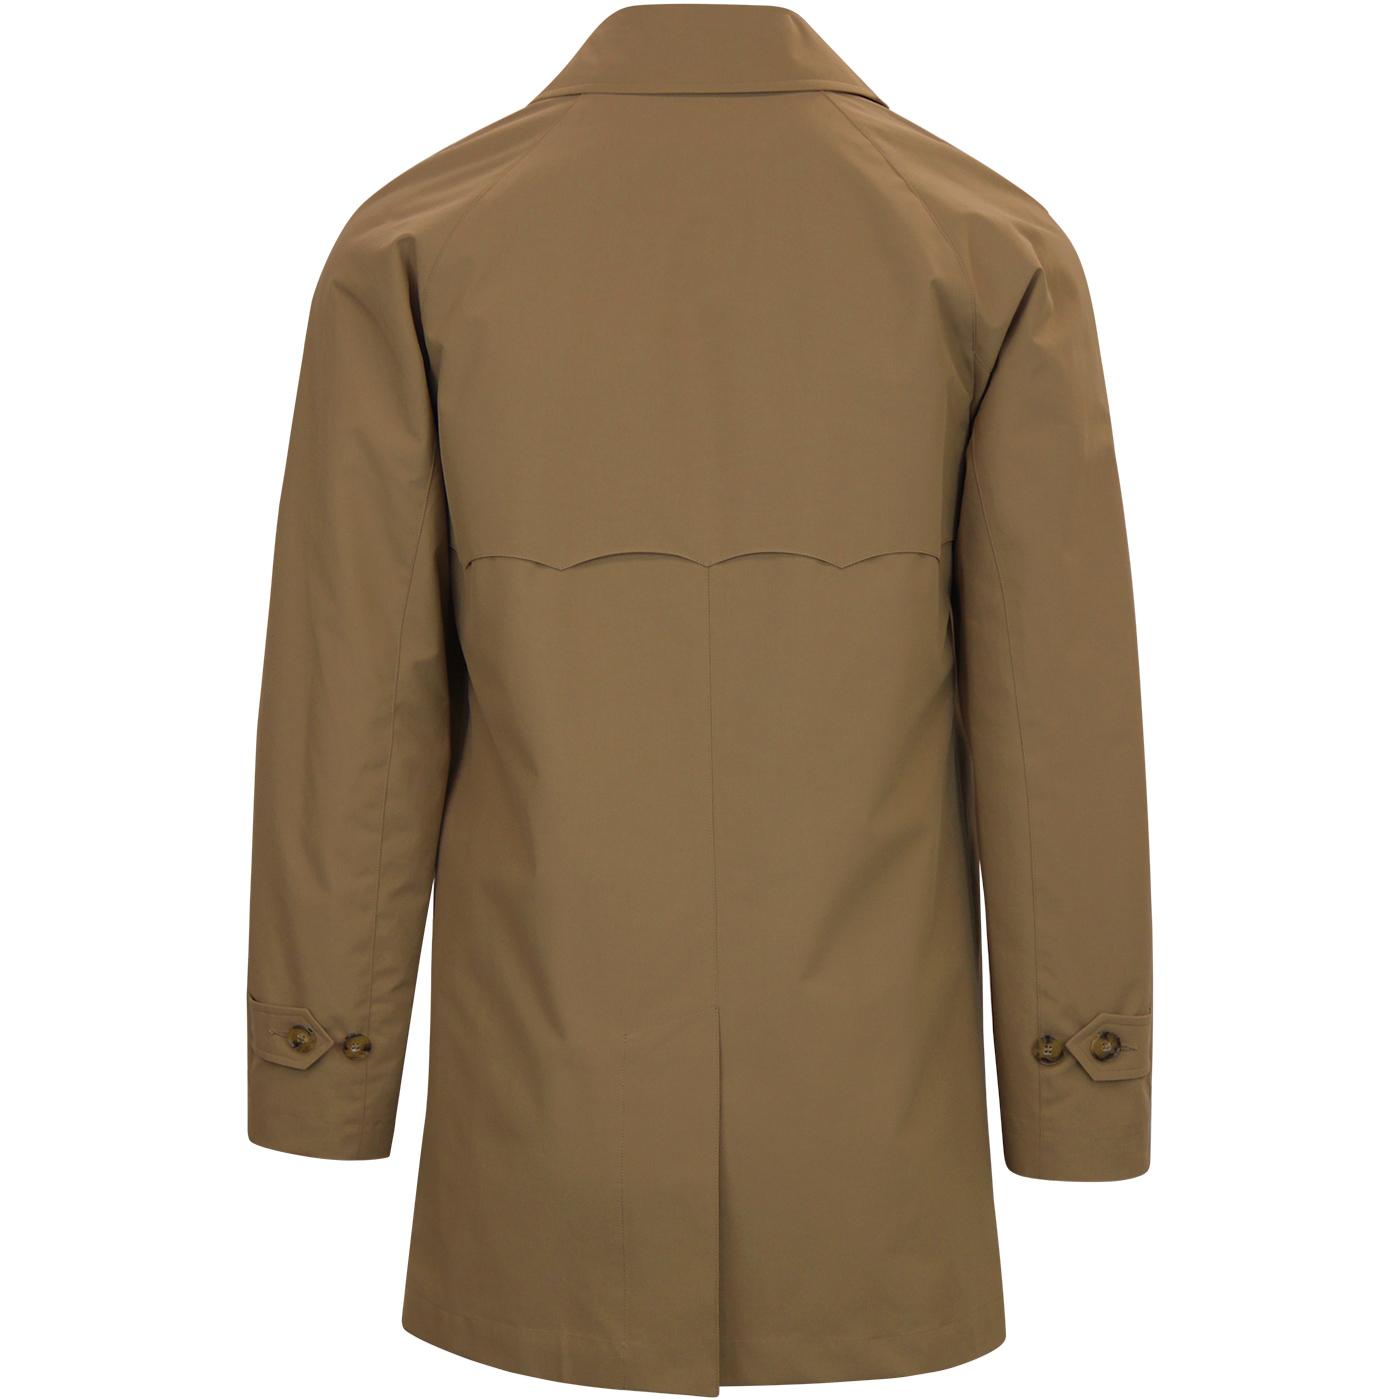 BARACUTA G10 Men's Made in England Mac Raincoat in Tan